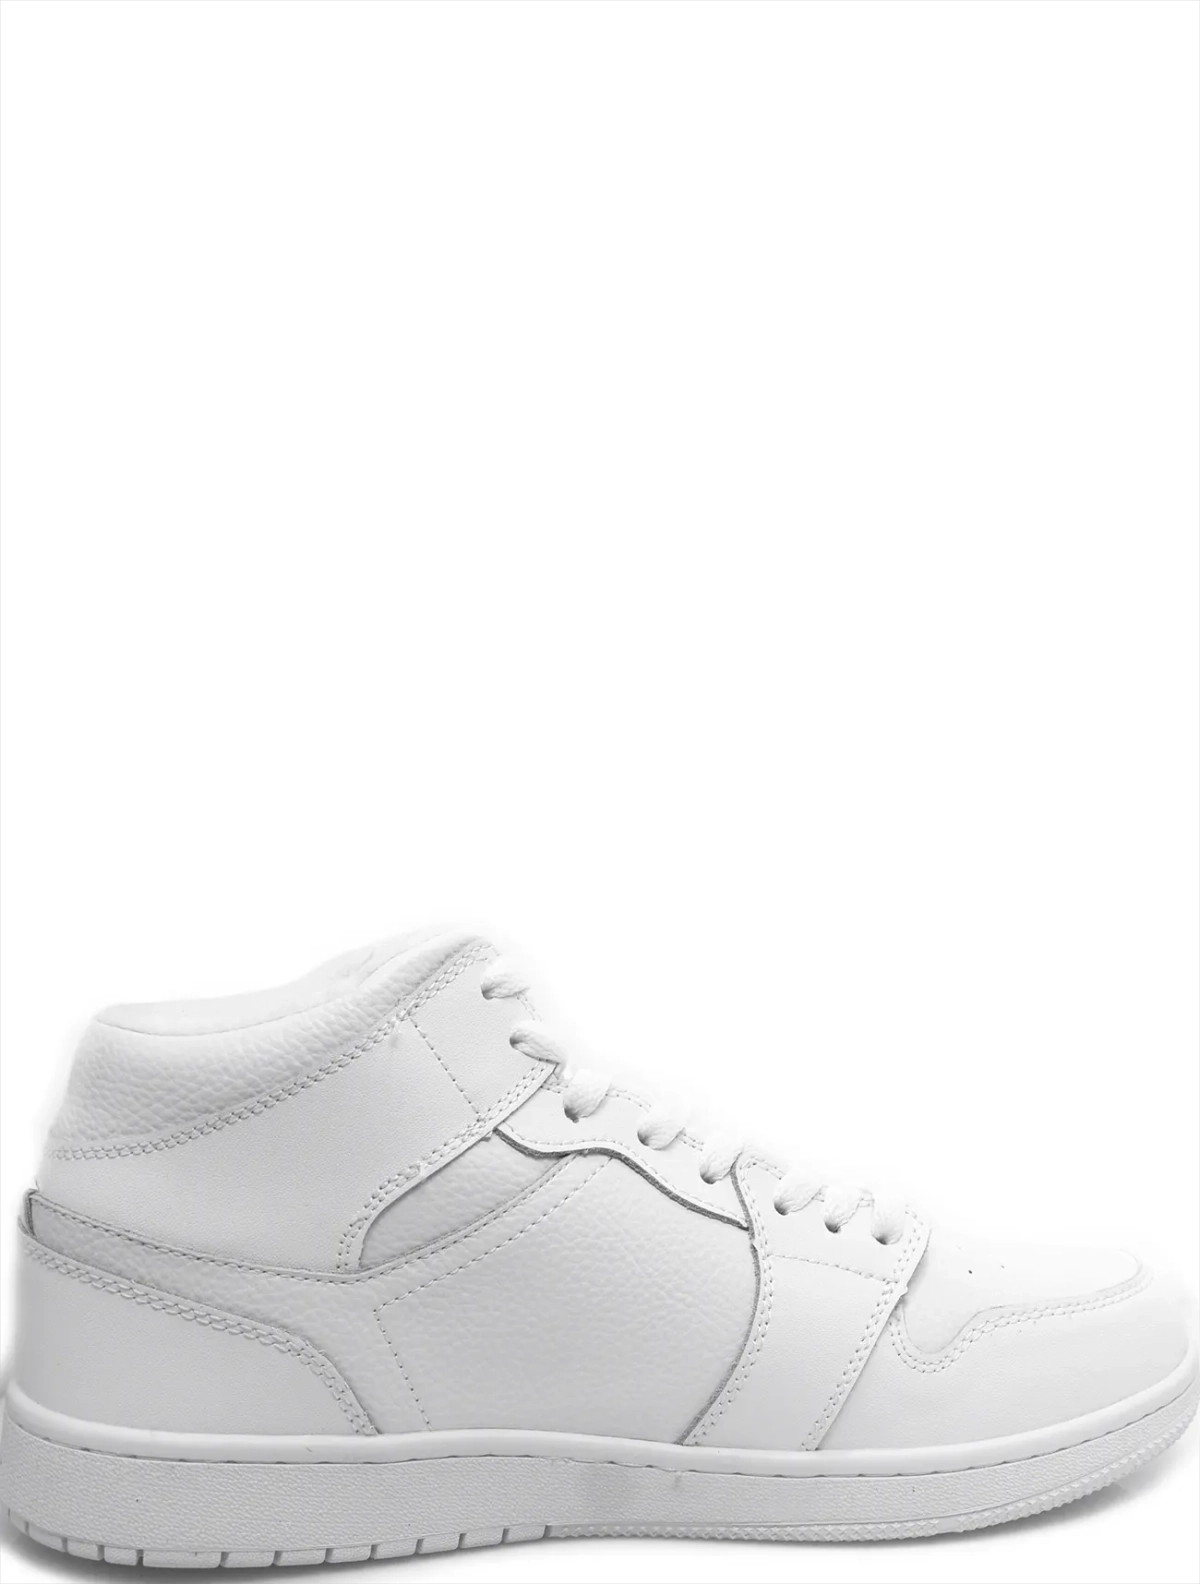 Strobbs C3351-6 мужские кроссовки